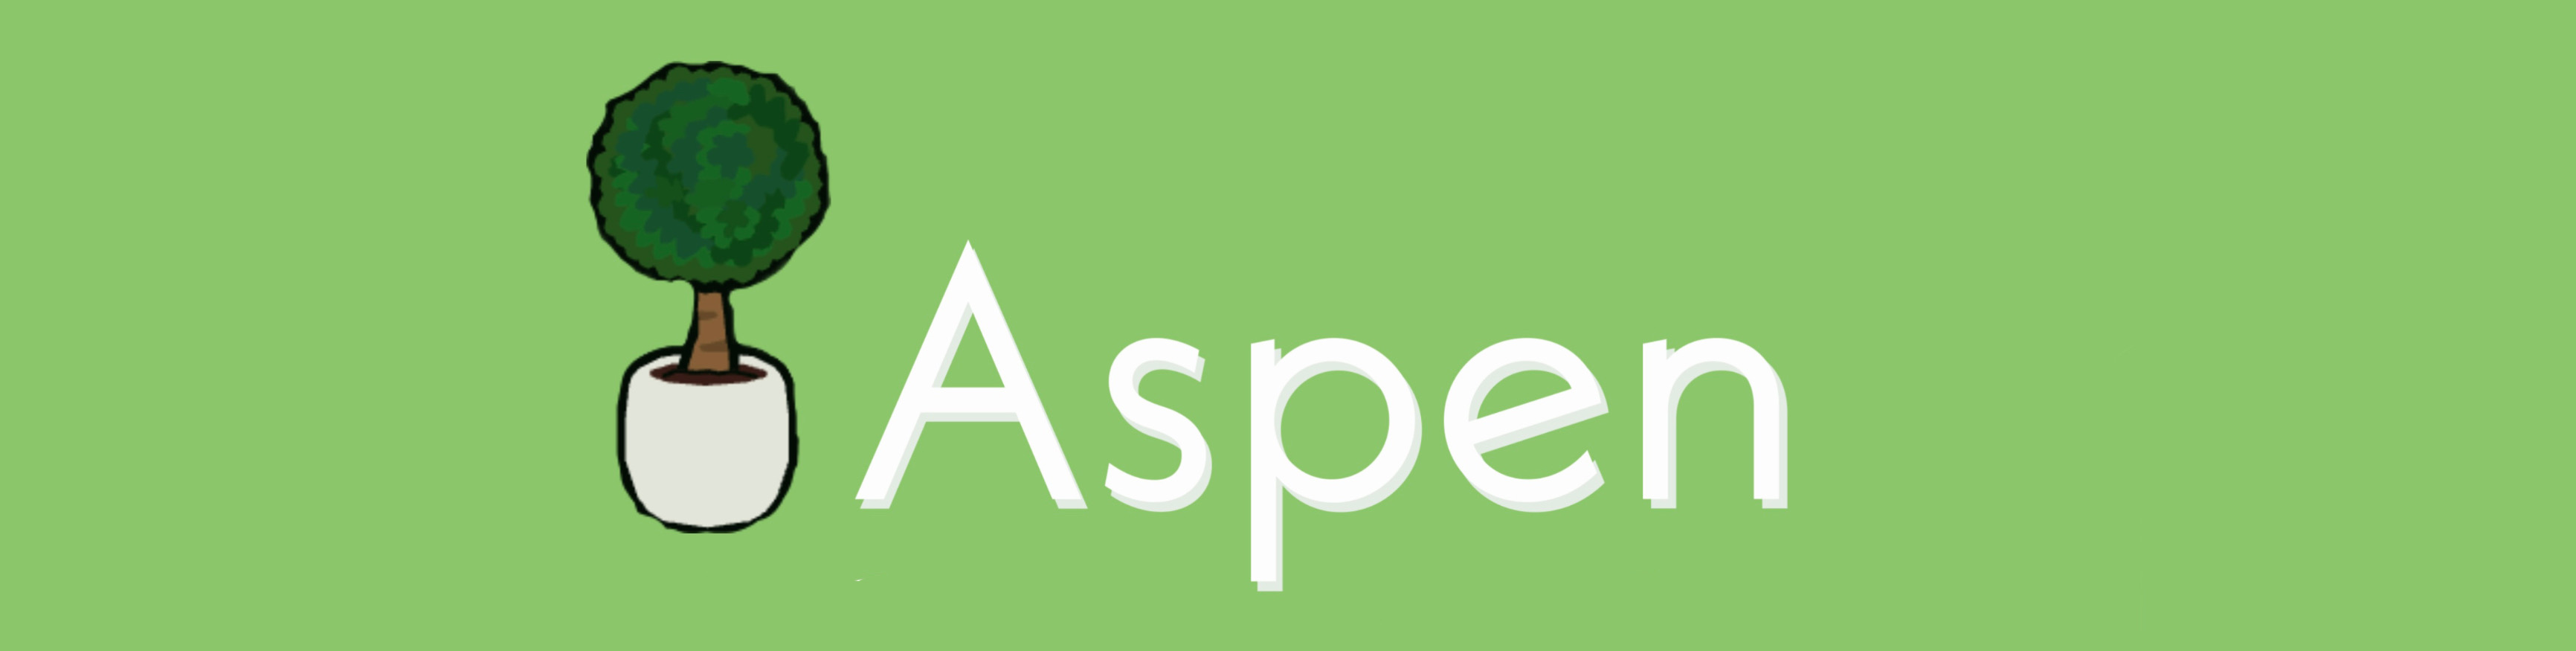 Aspen Image